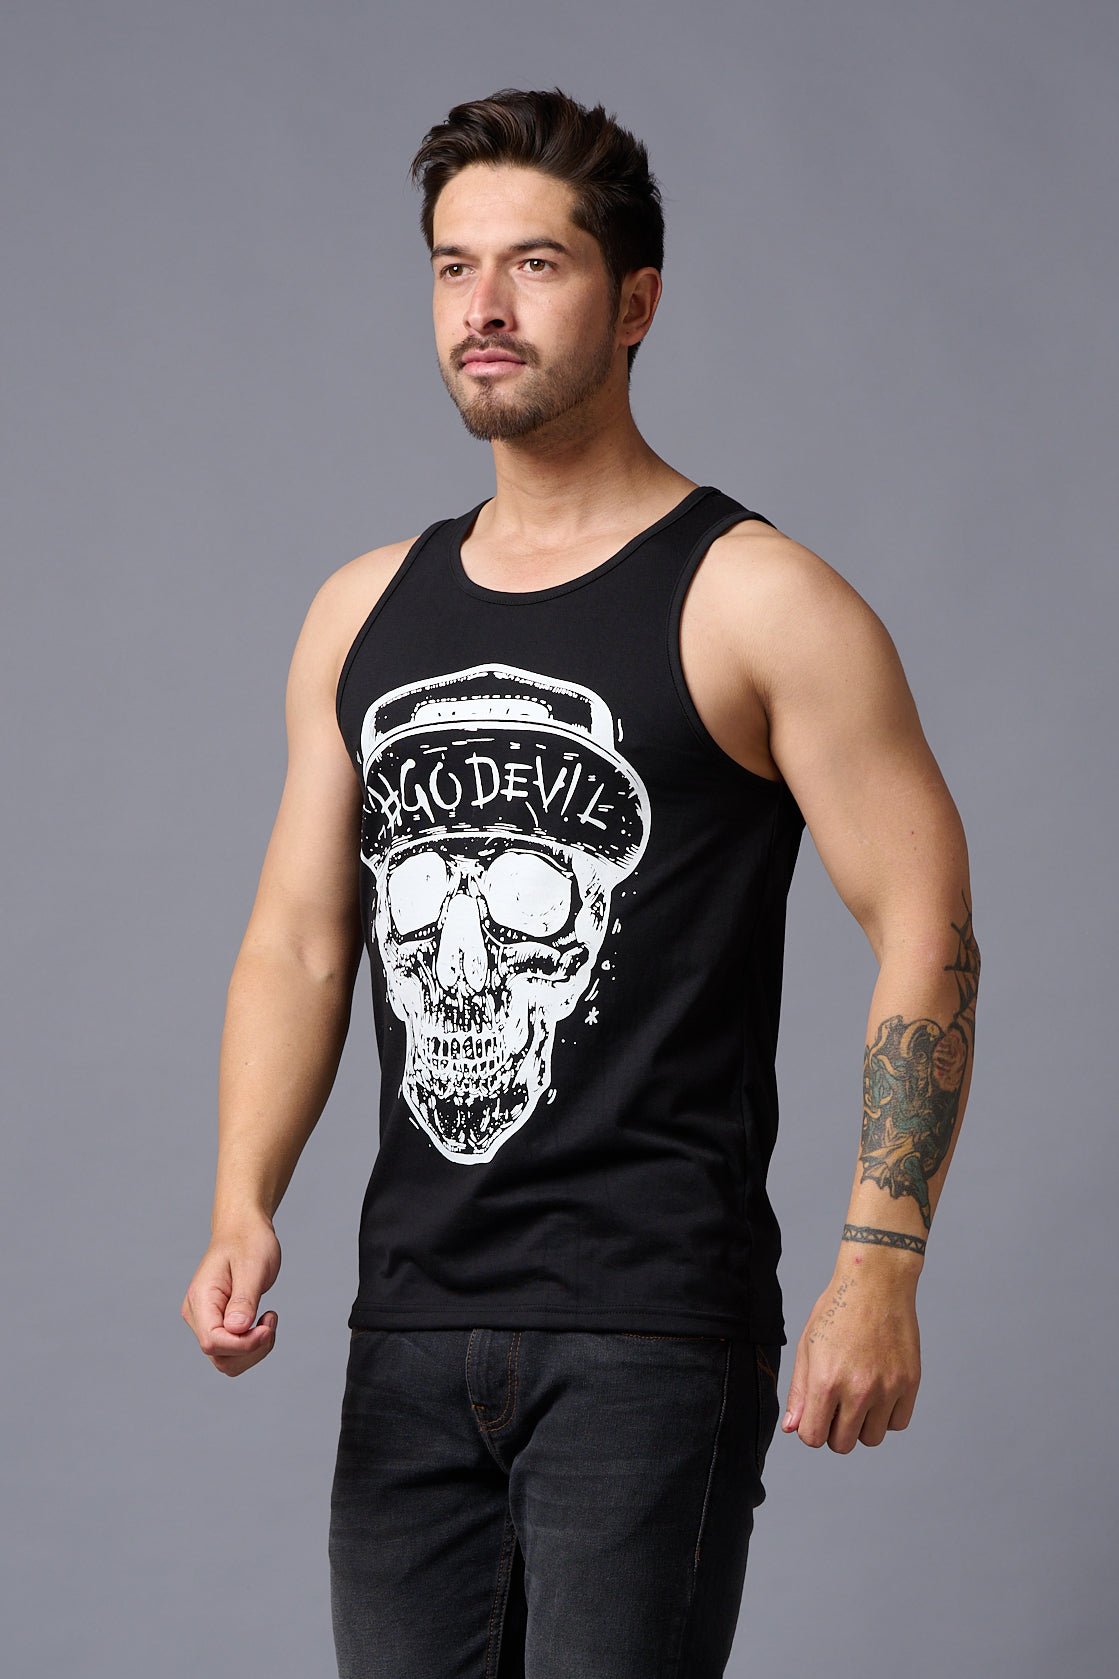 #Go Devil with Skull Printed Vest for Men - Go Devil